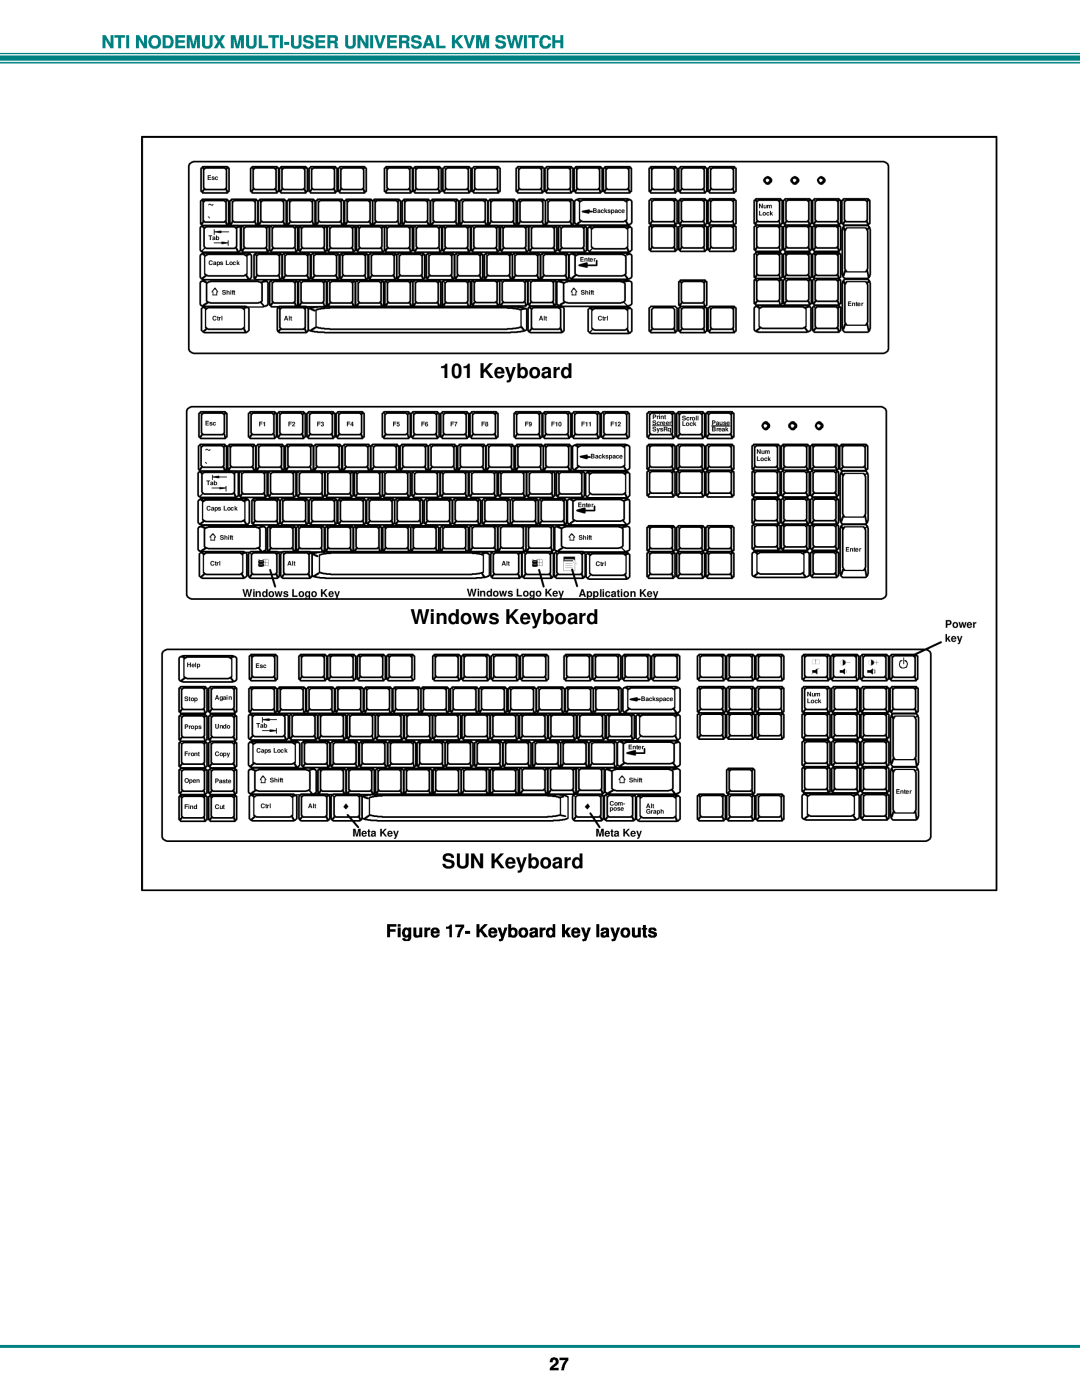 Network Technologies ST-nXm-U Windows Keyboard, SUN Keyboard, Keyboard key layouts, Windows Logo Key, Application Key 